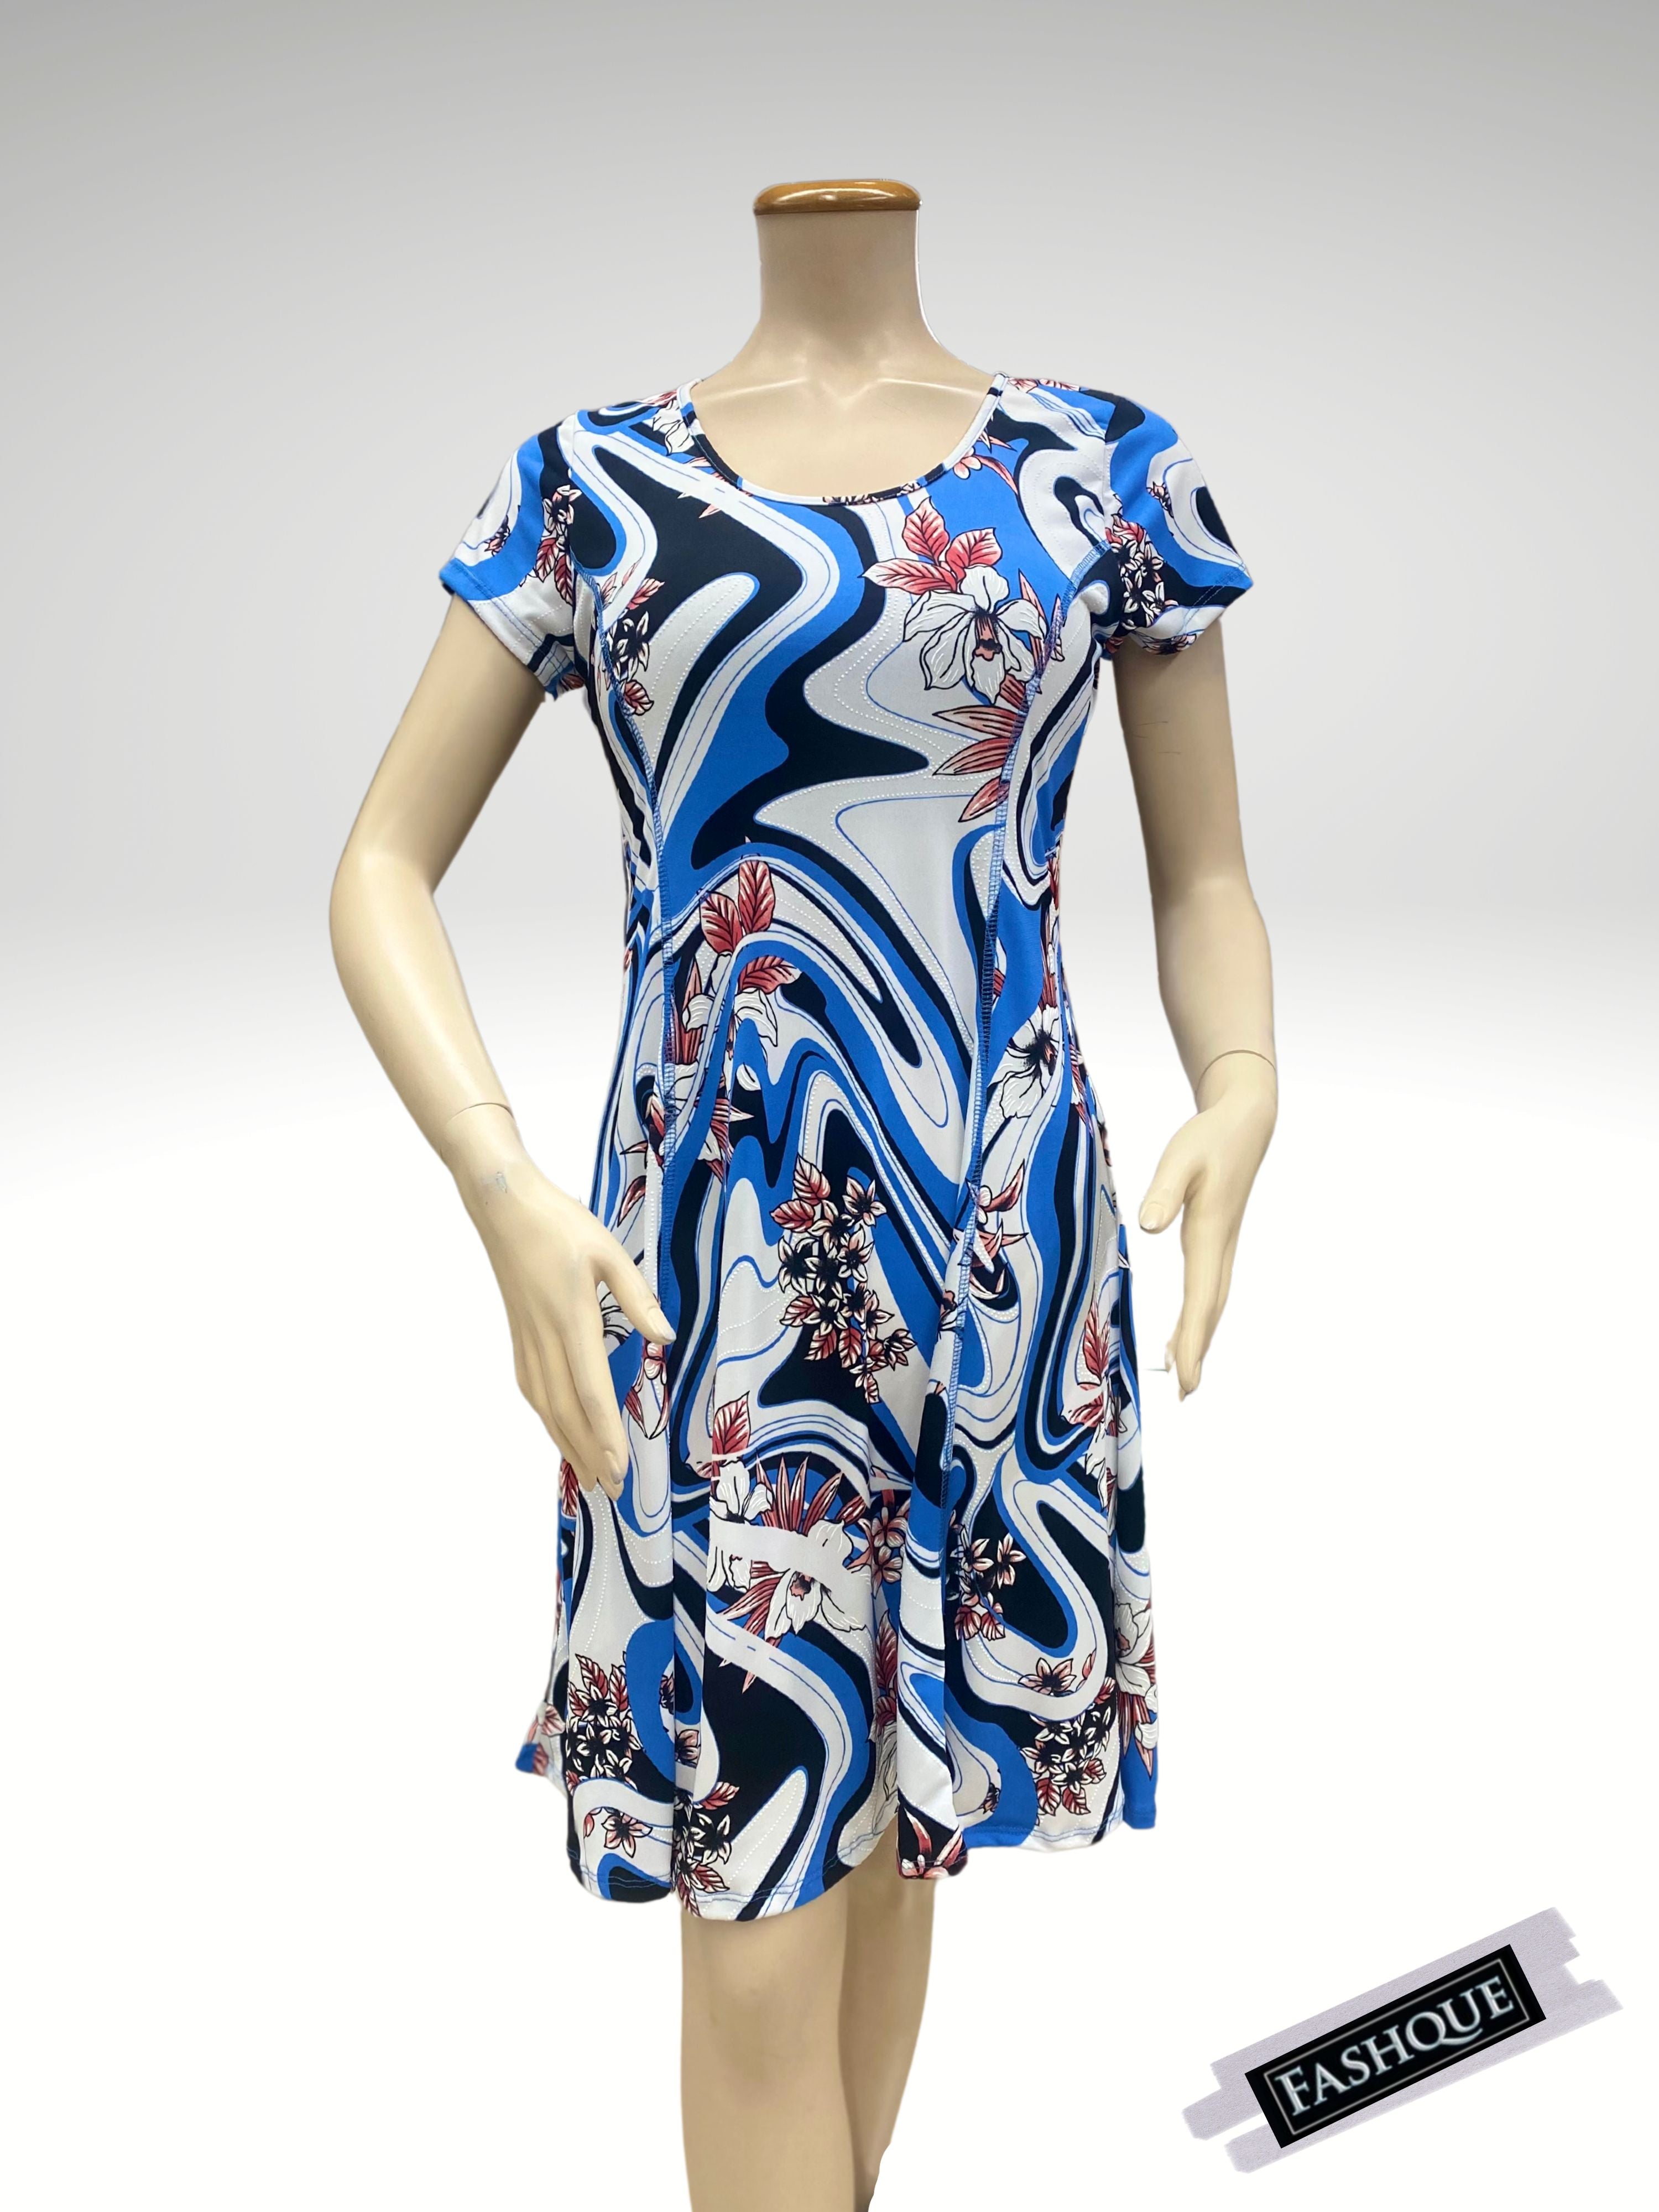 FASHQUE - Highlighted Princess Seam Scoop Neck Dress - D037 SALE